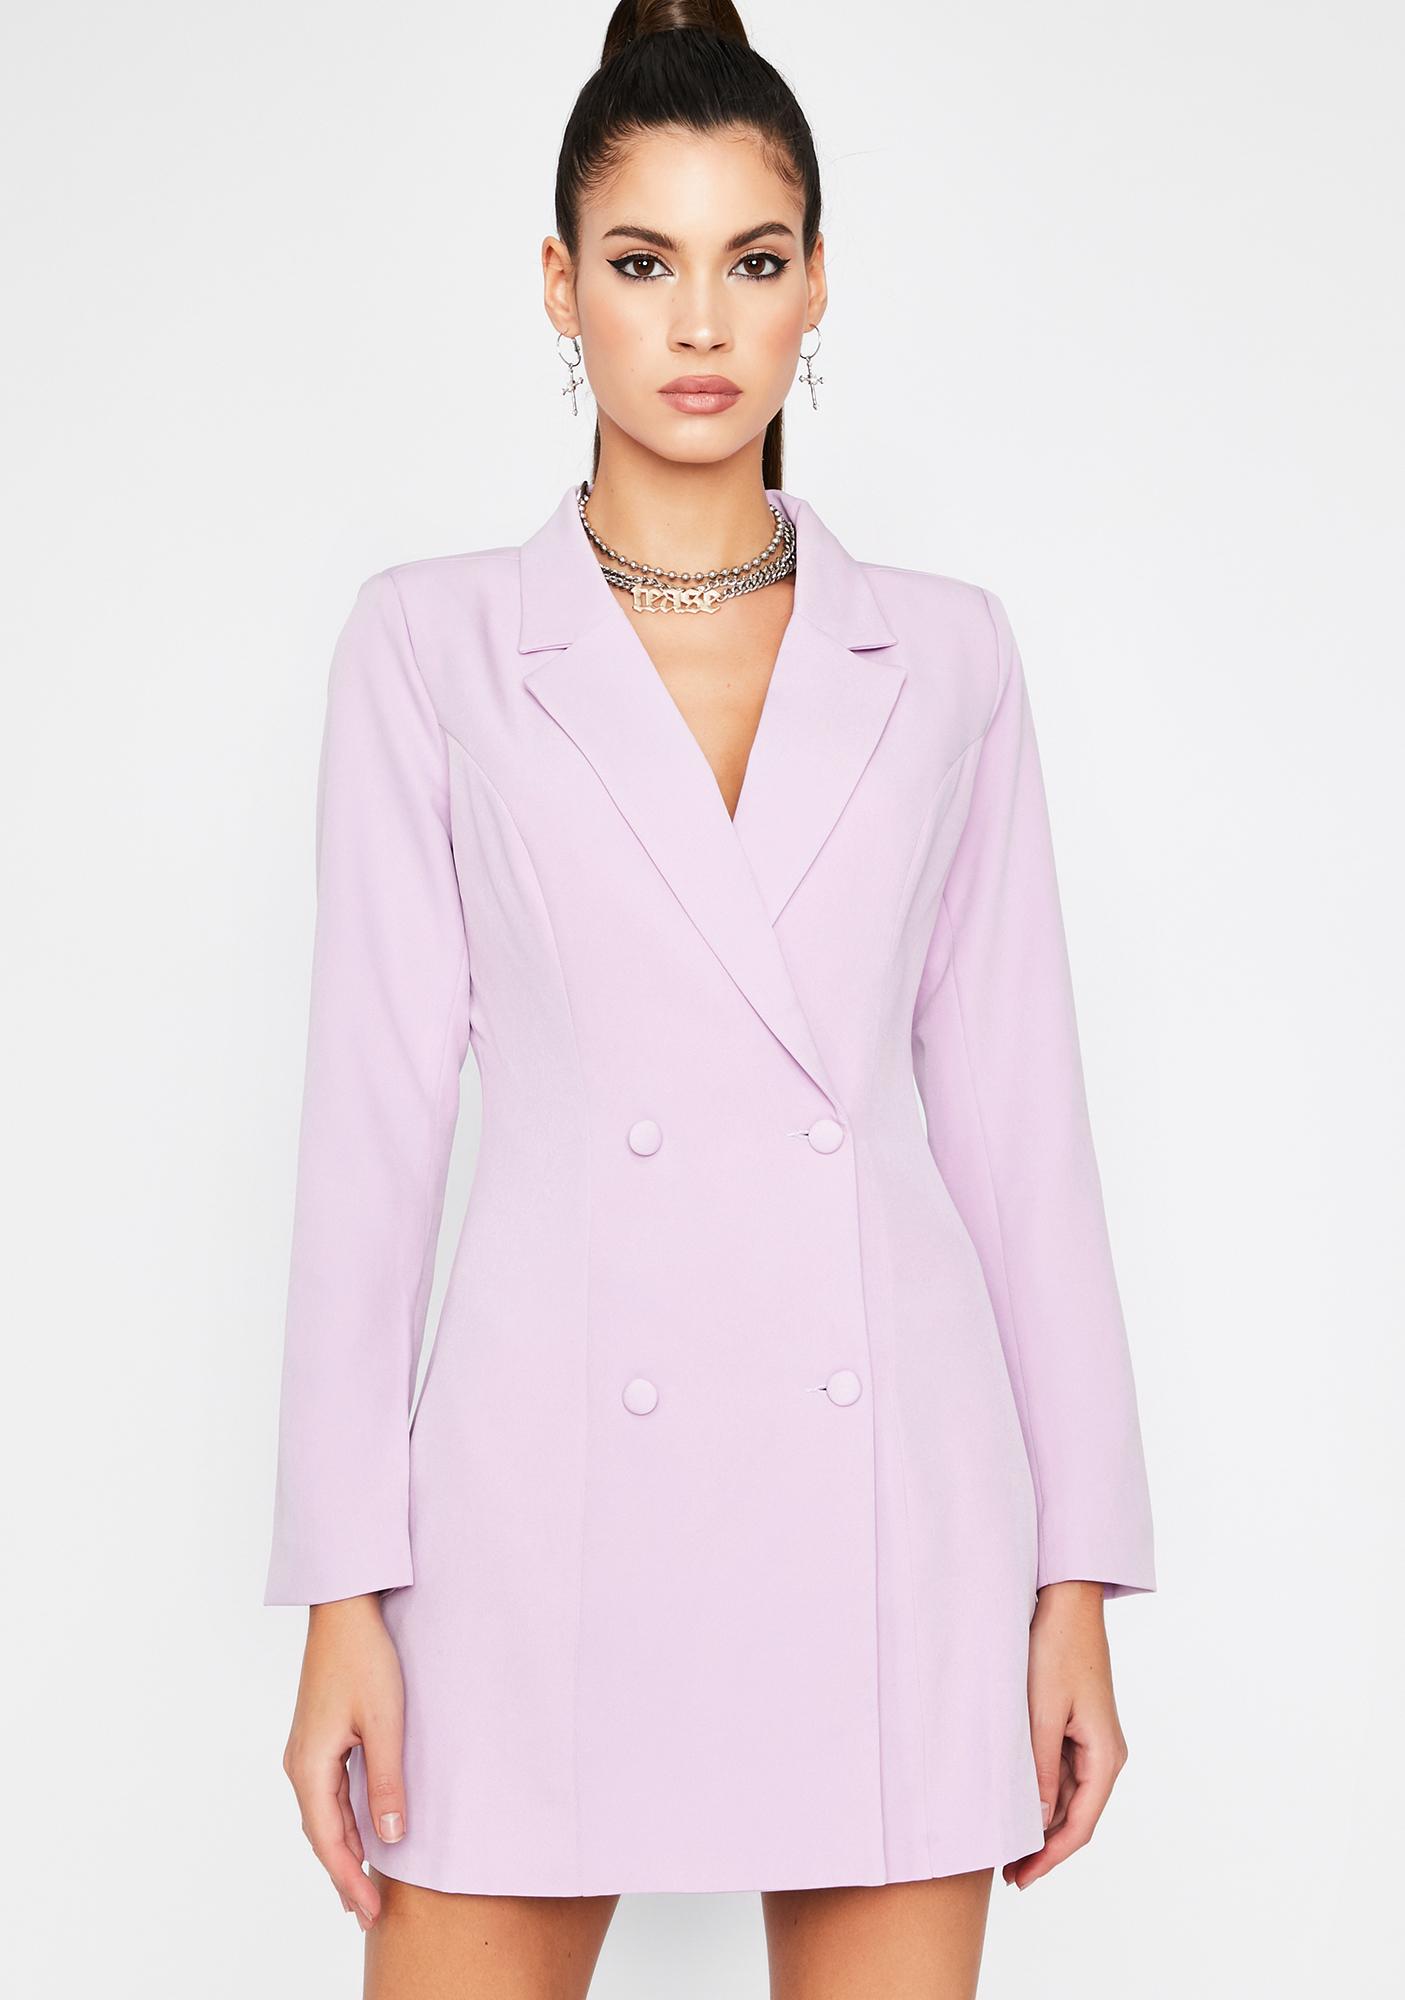 lavender blazer outfits